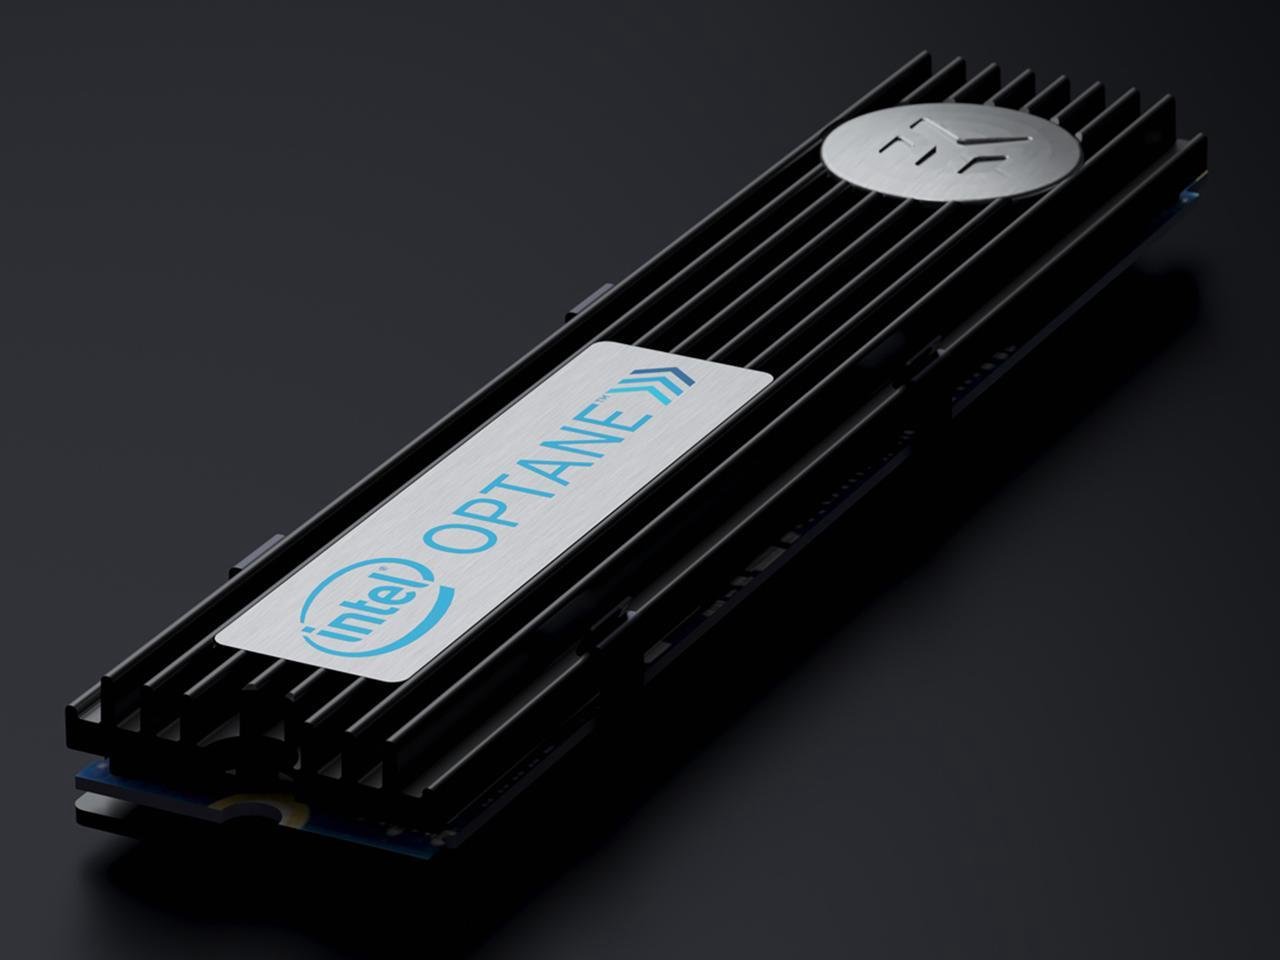 Intel Optane SSD 905P M.2